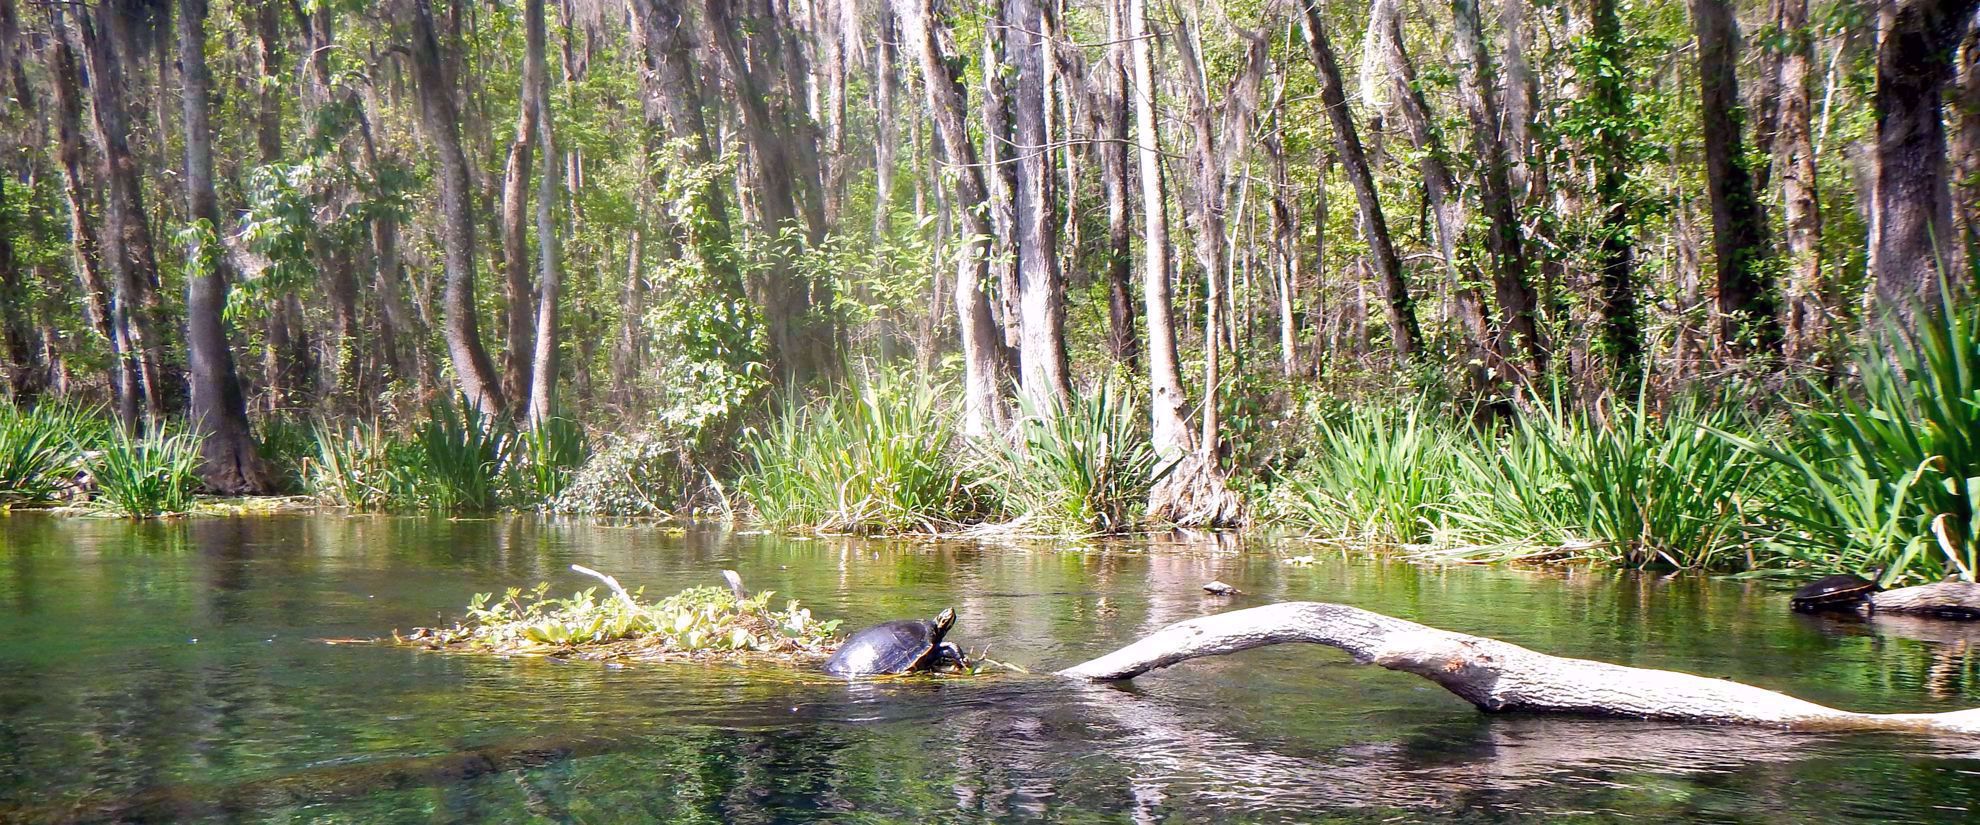 turtle on grass island suwannee river